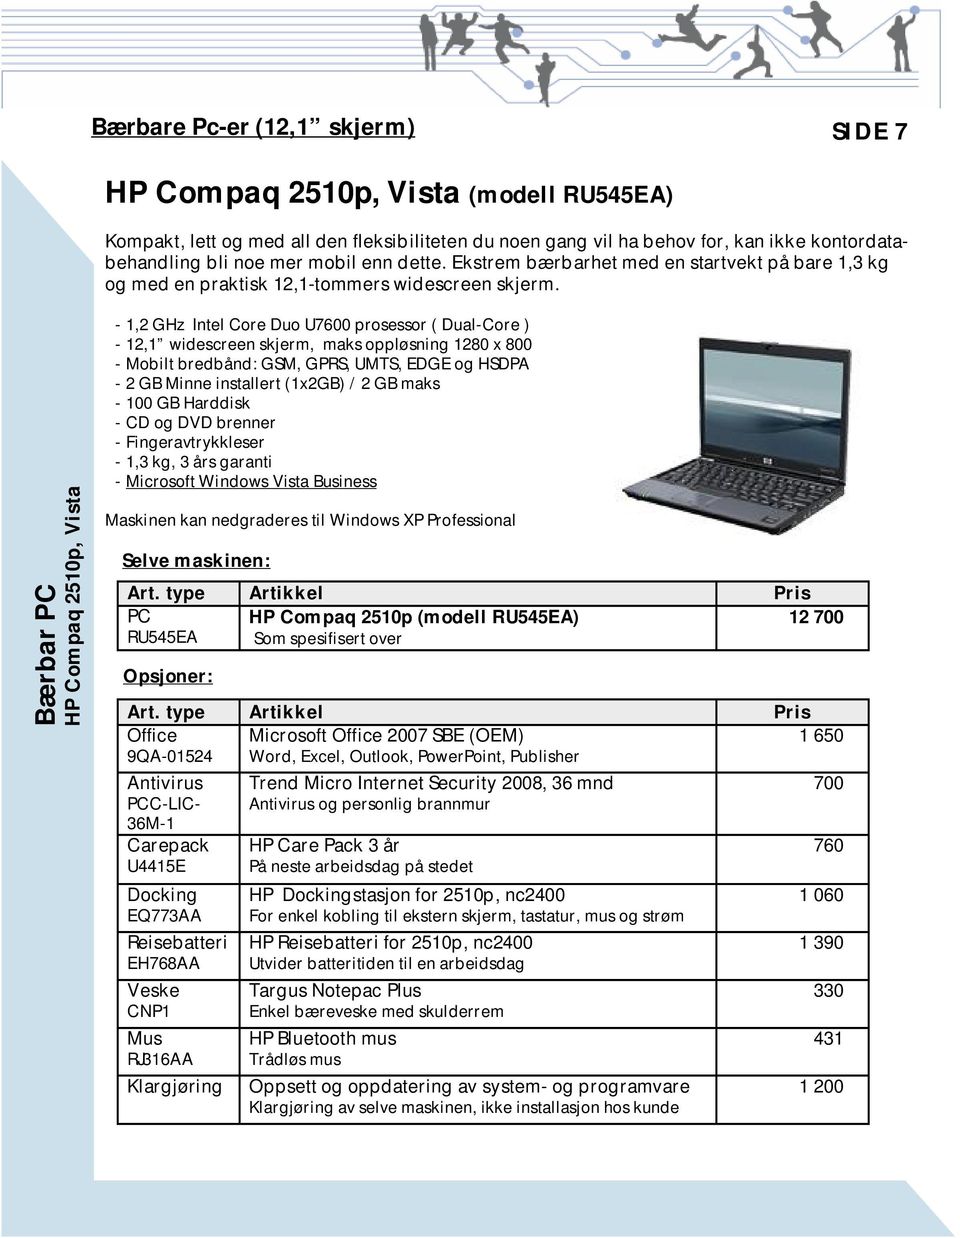 Bærbar PC HP Compaq 2510p, Vista - 1,2 GHz Intel Core Duo U7600 prosessor ( Dual-Core ) - 12,1 widescreen skjerm, maks oppløsning 1280 x 800 - Mobilt bredbånd: GSM, GPRS, UMTS, EDGE og HSDPA - 2 GB